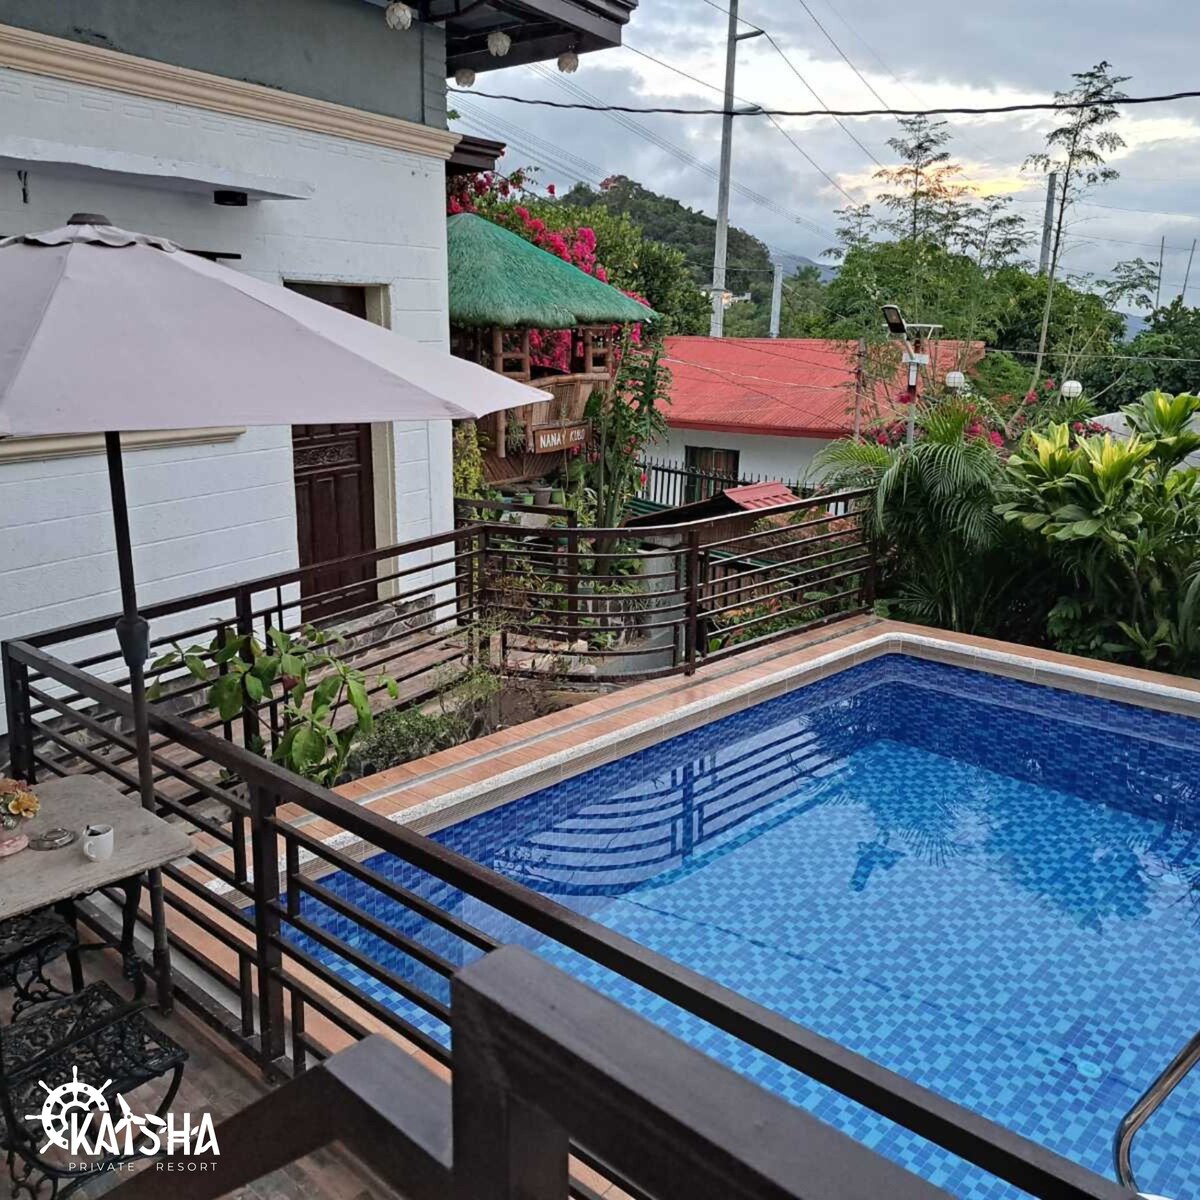 Kaisha Private Resort - Home, Event Hall and Pools